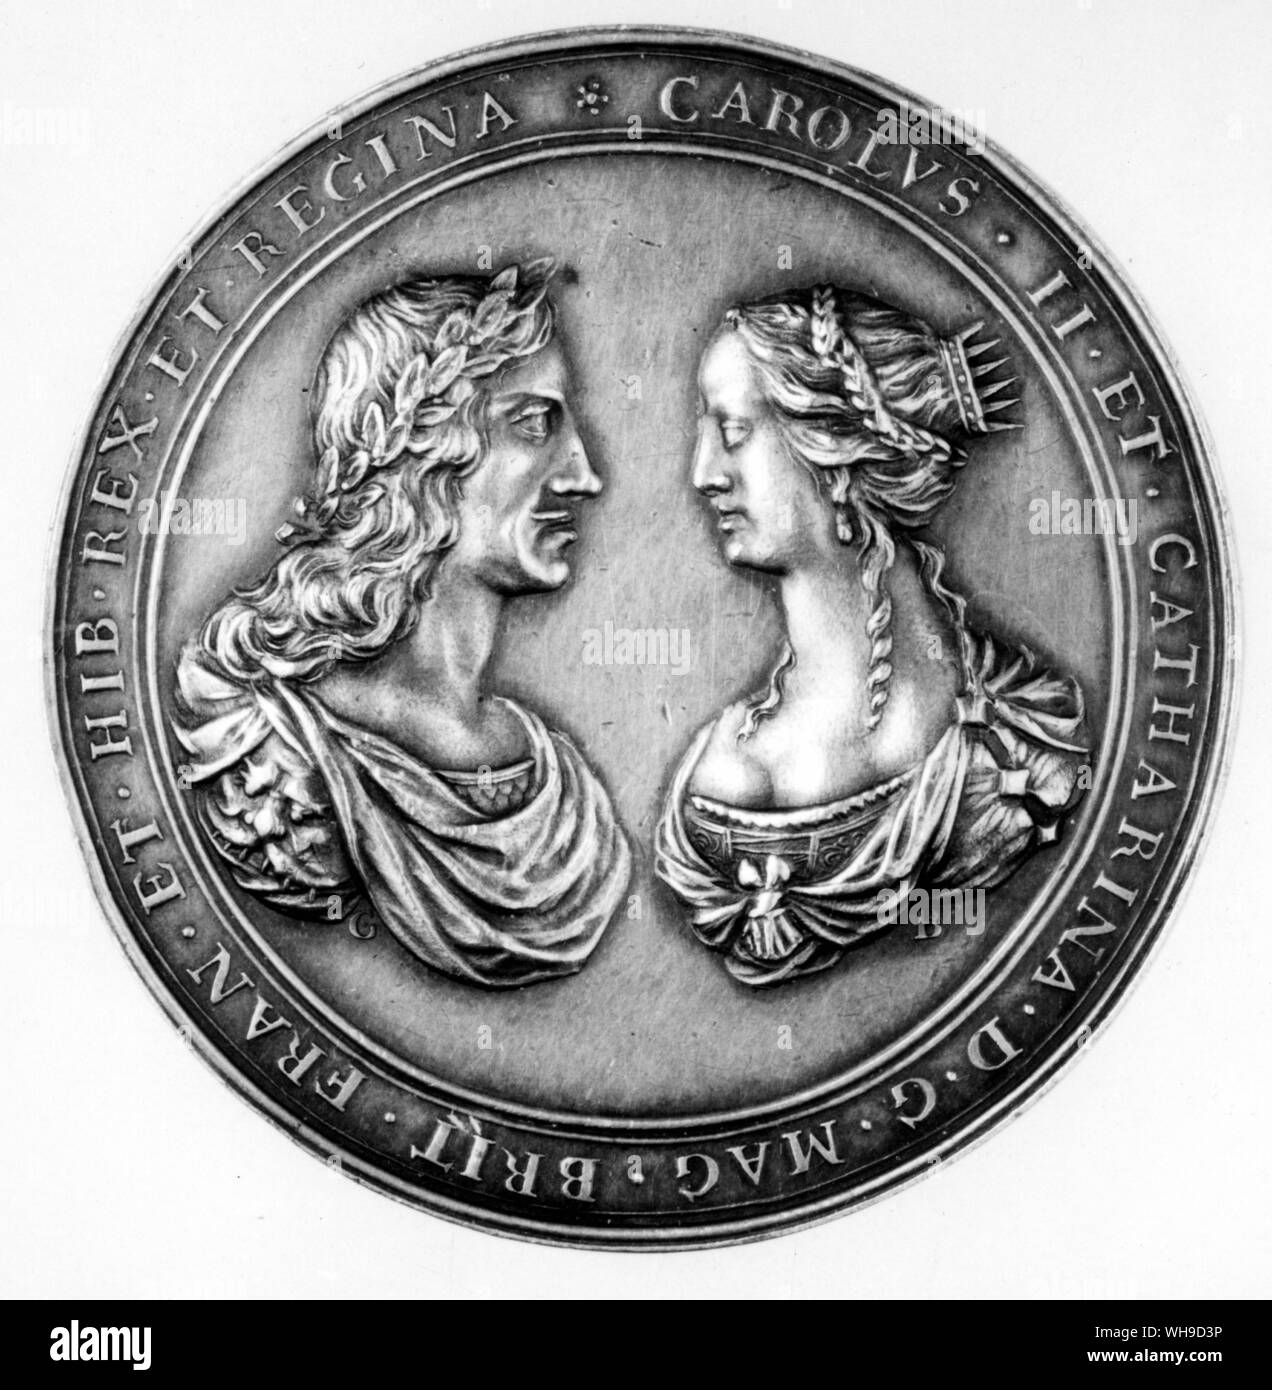 Charles II d'Inghilterra (1630-85) con la regina Caterina (1638-1705) su una moneta. Foto Stock